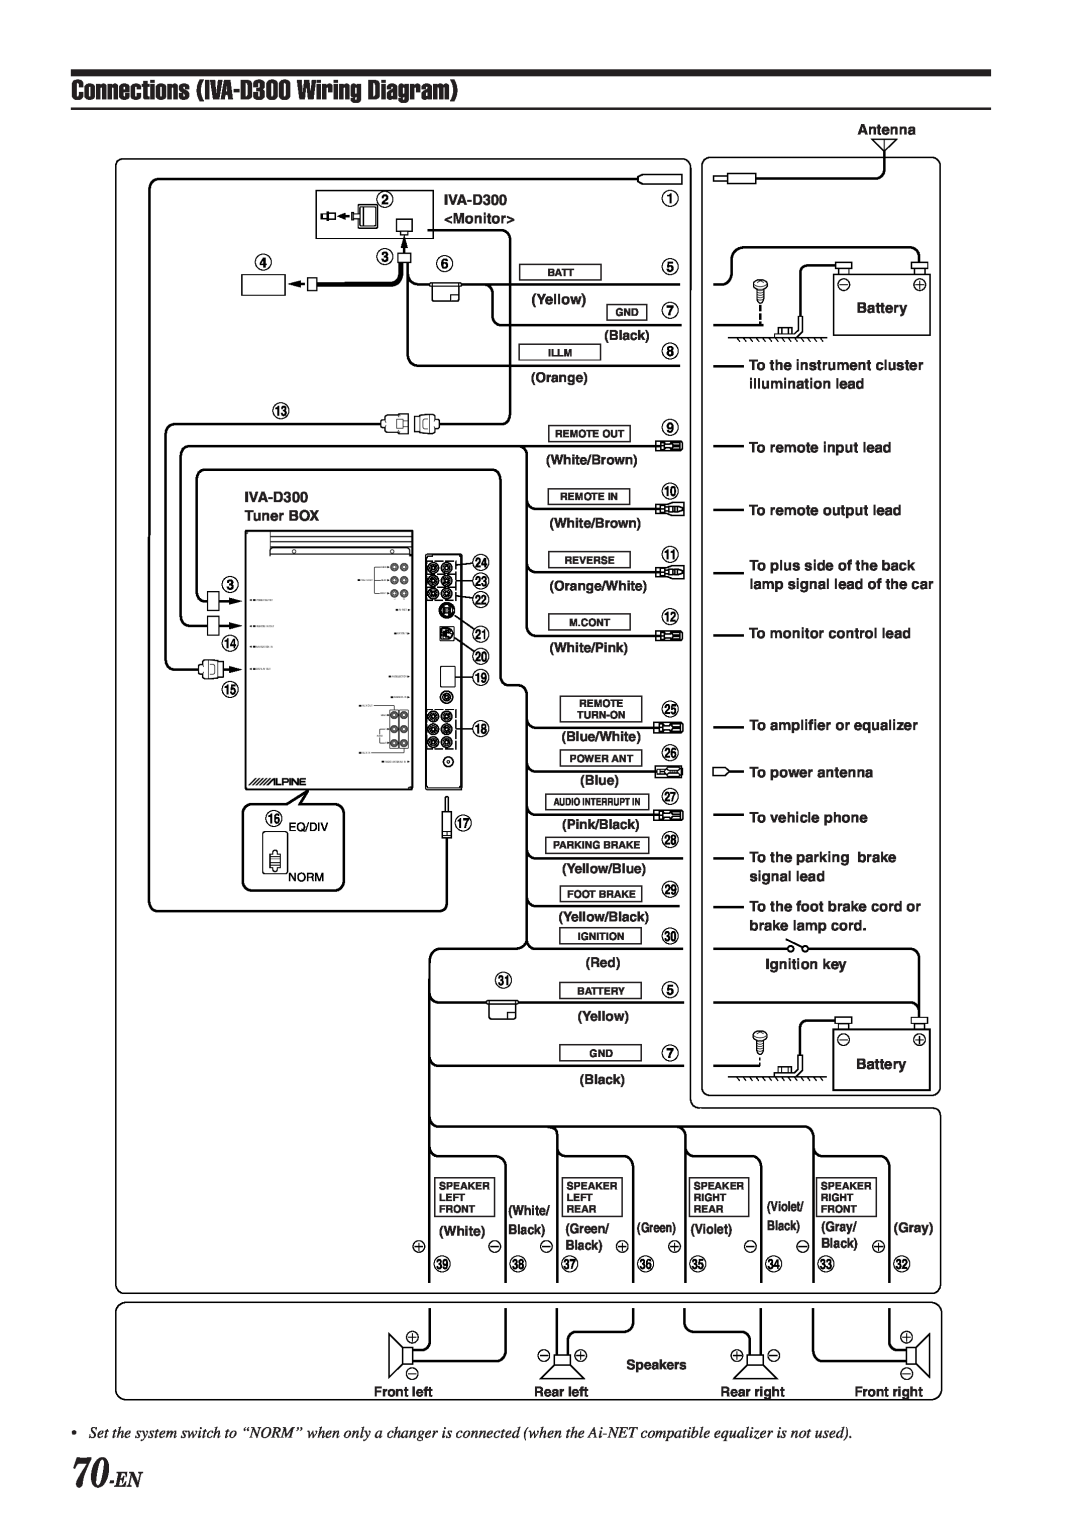 Alpine owner manual Connections IVA-D300Wiring Diagram, 70-EN, 2 4 $ 